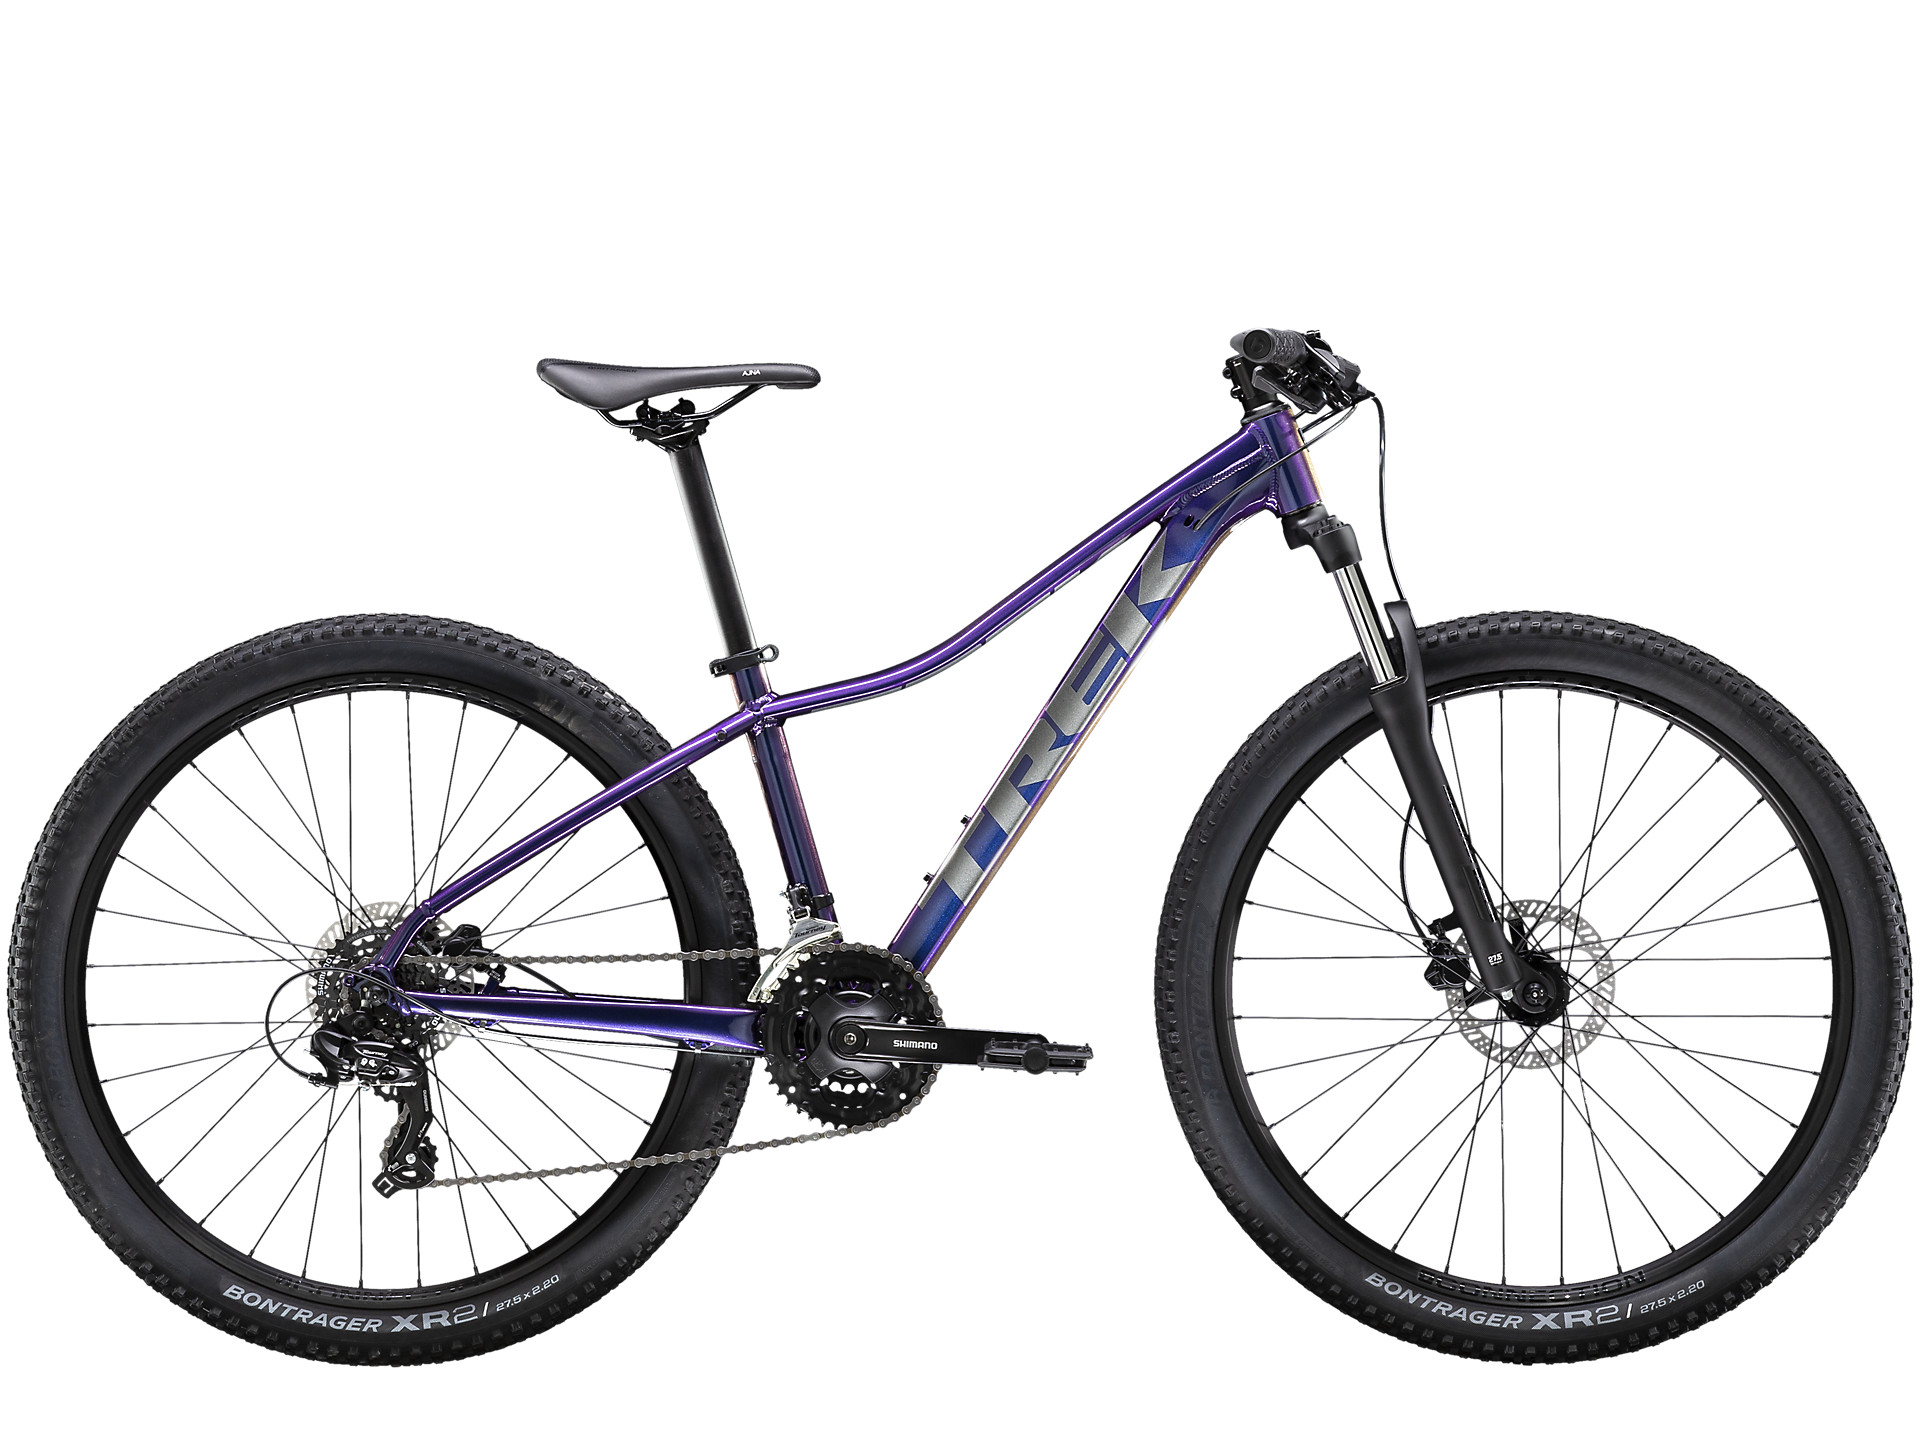 Purple Trek Marlin 5 mountain bike for women with disc brakes